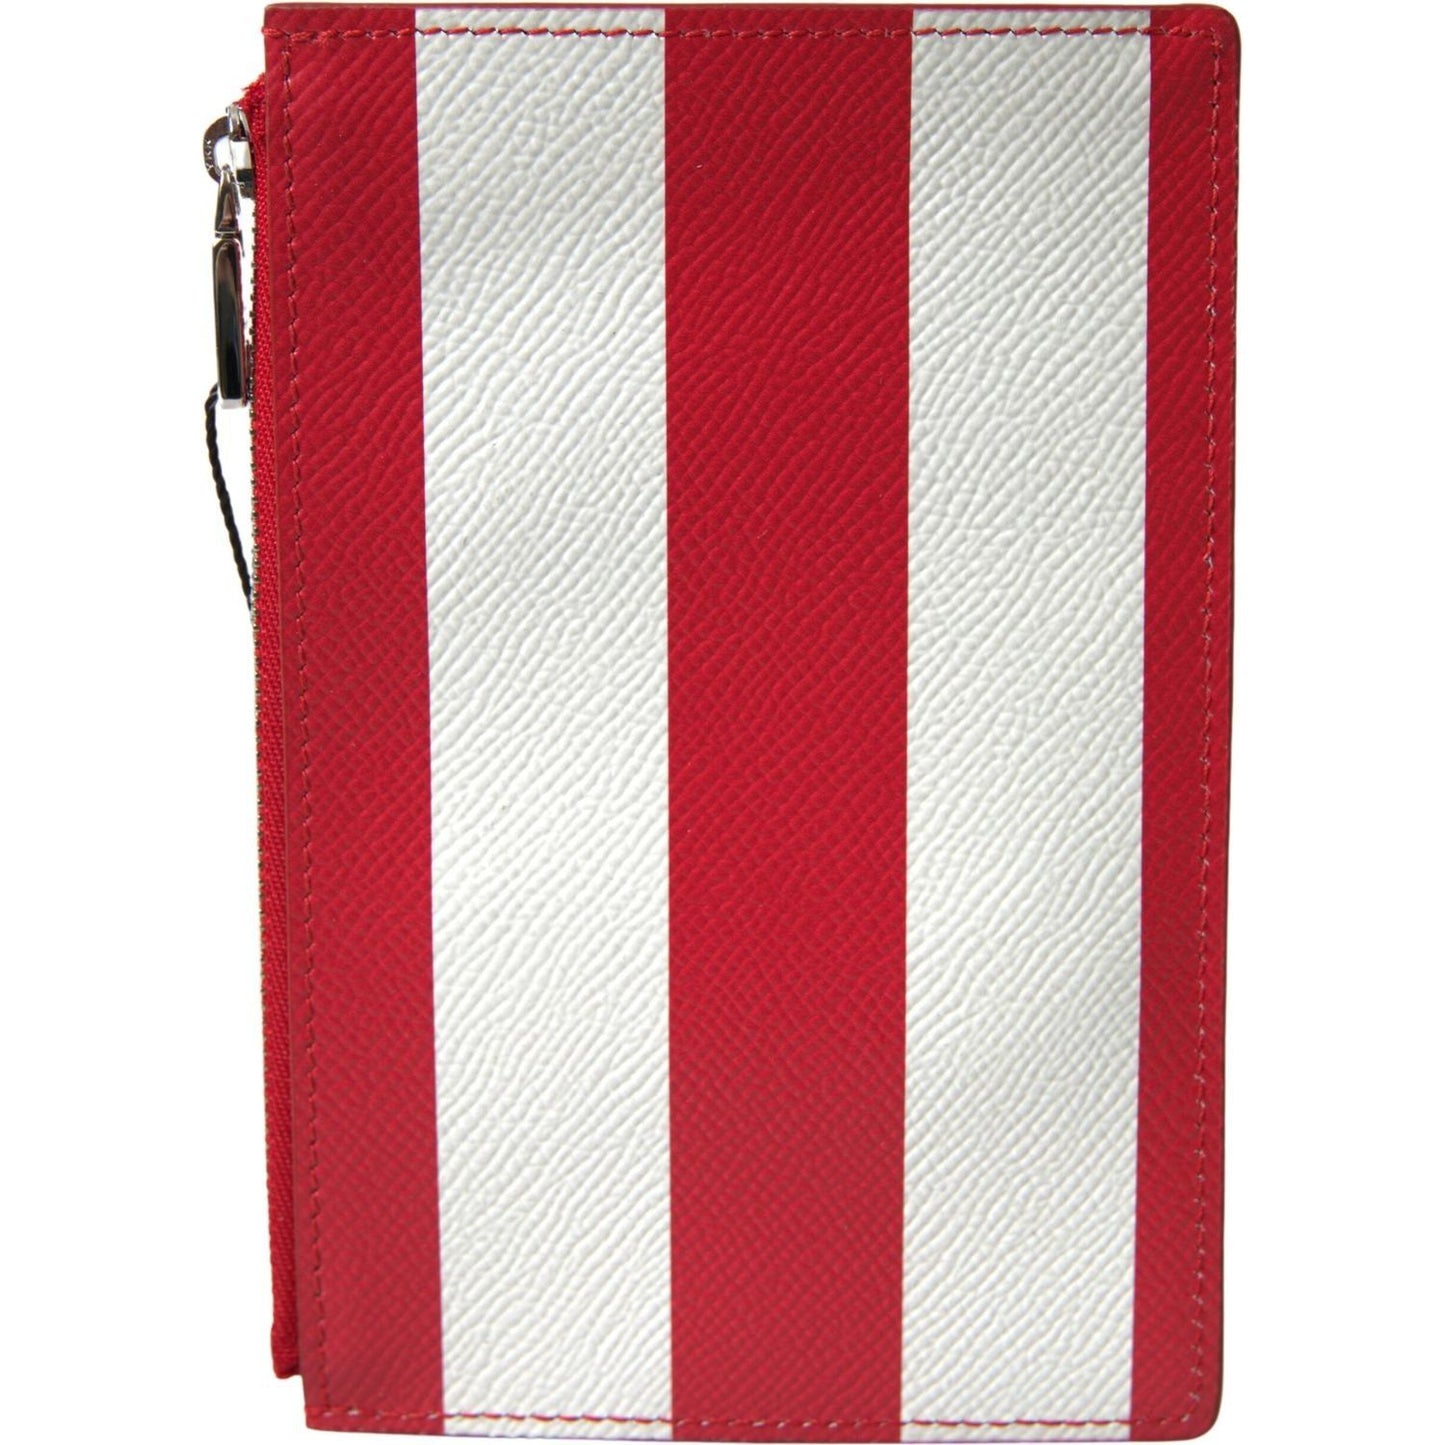 Dolce & Gabbana Elegant Striped Leather Card Holder red-white-leather-dg-logo-zip-card-holder-wallet